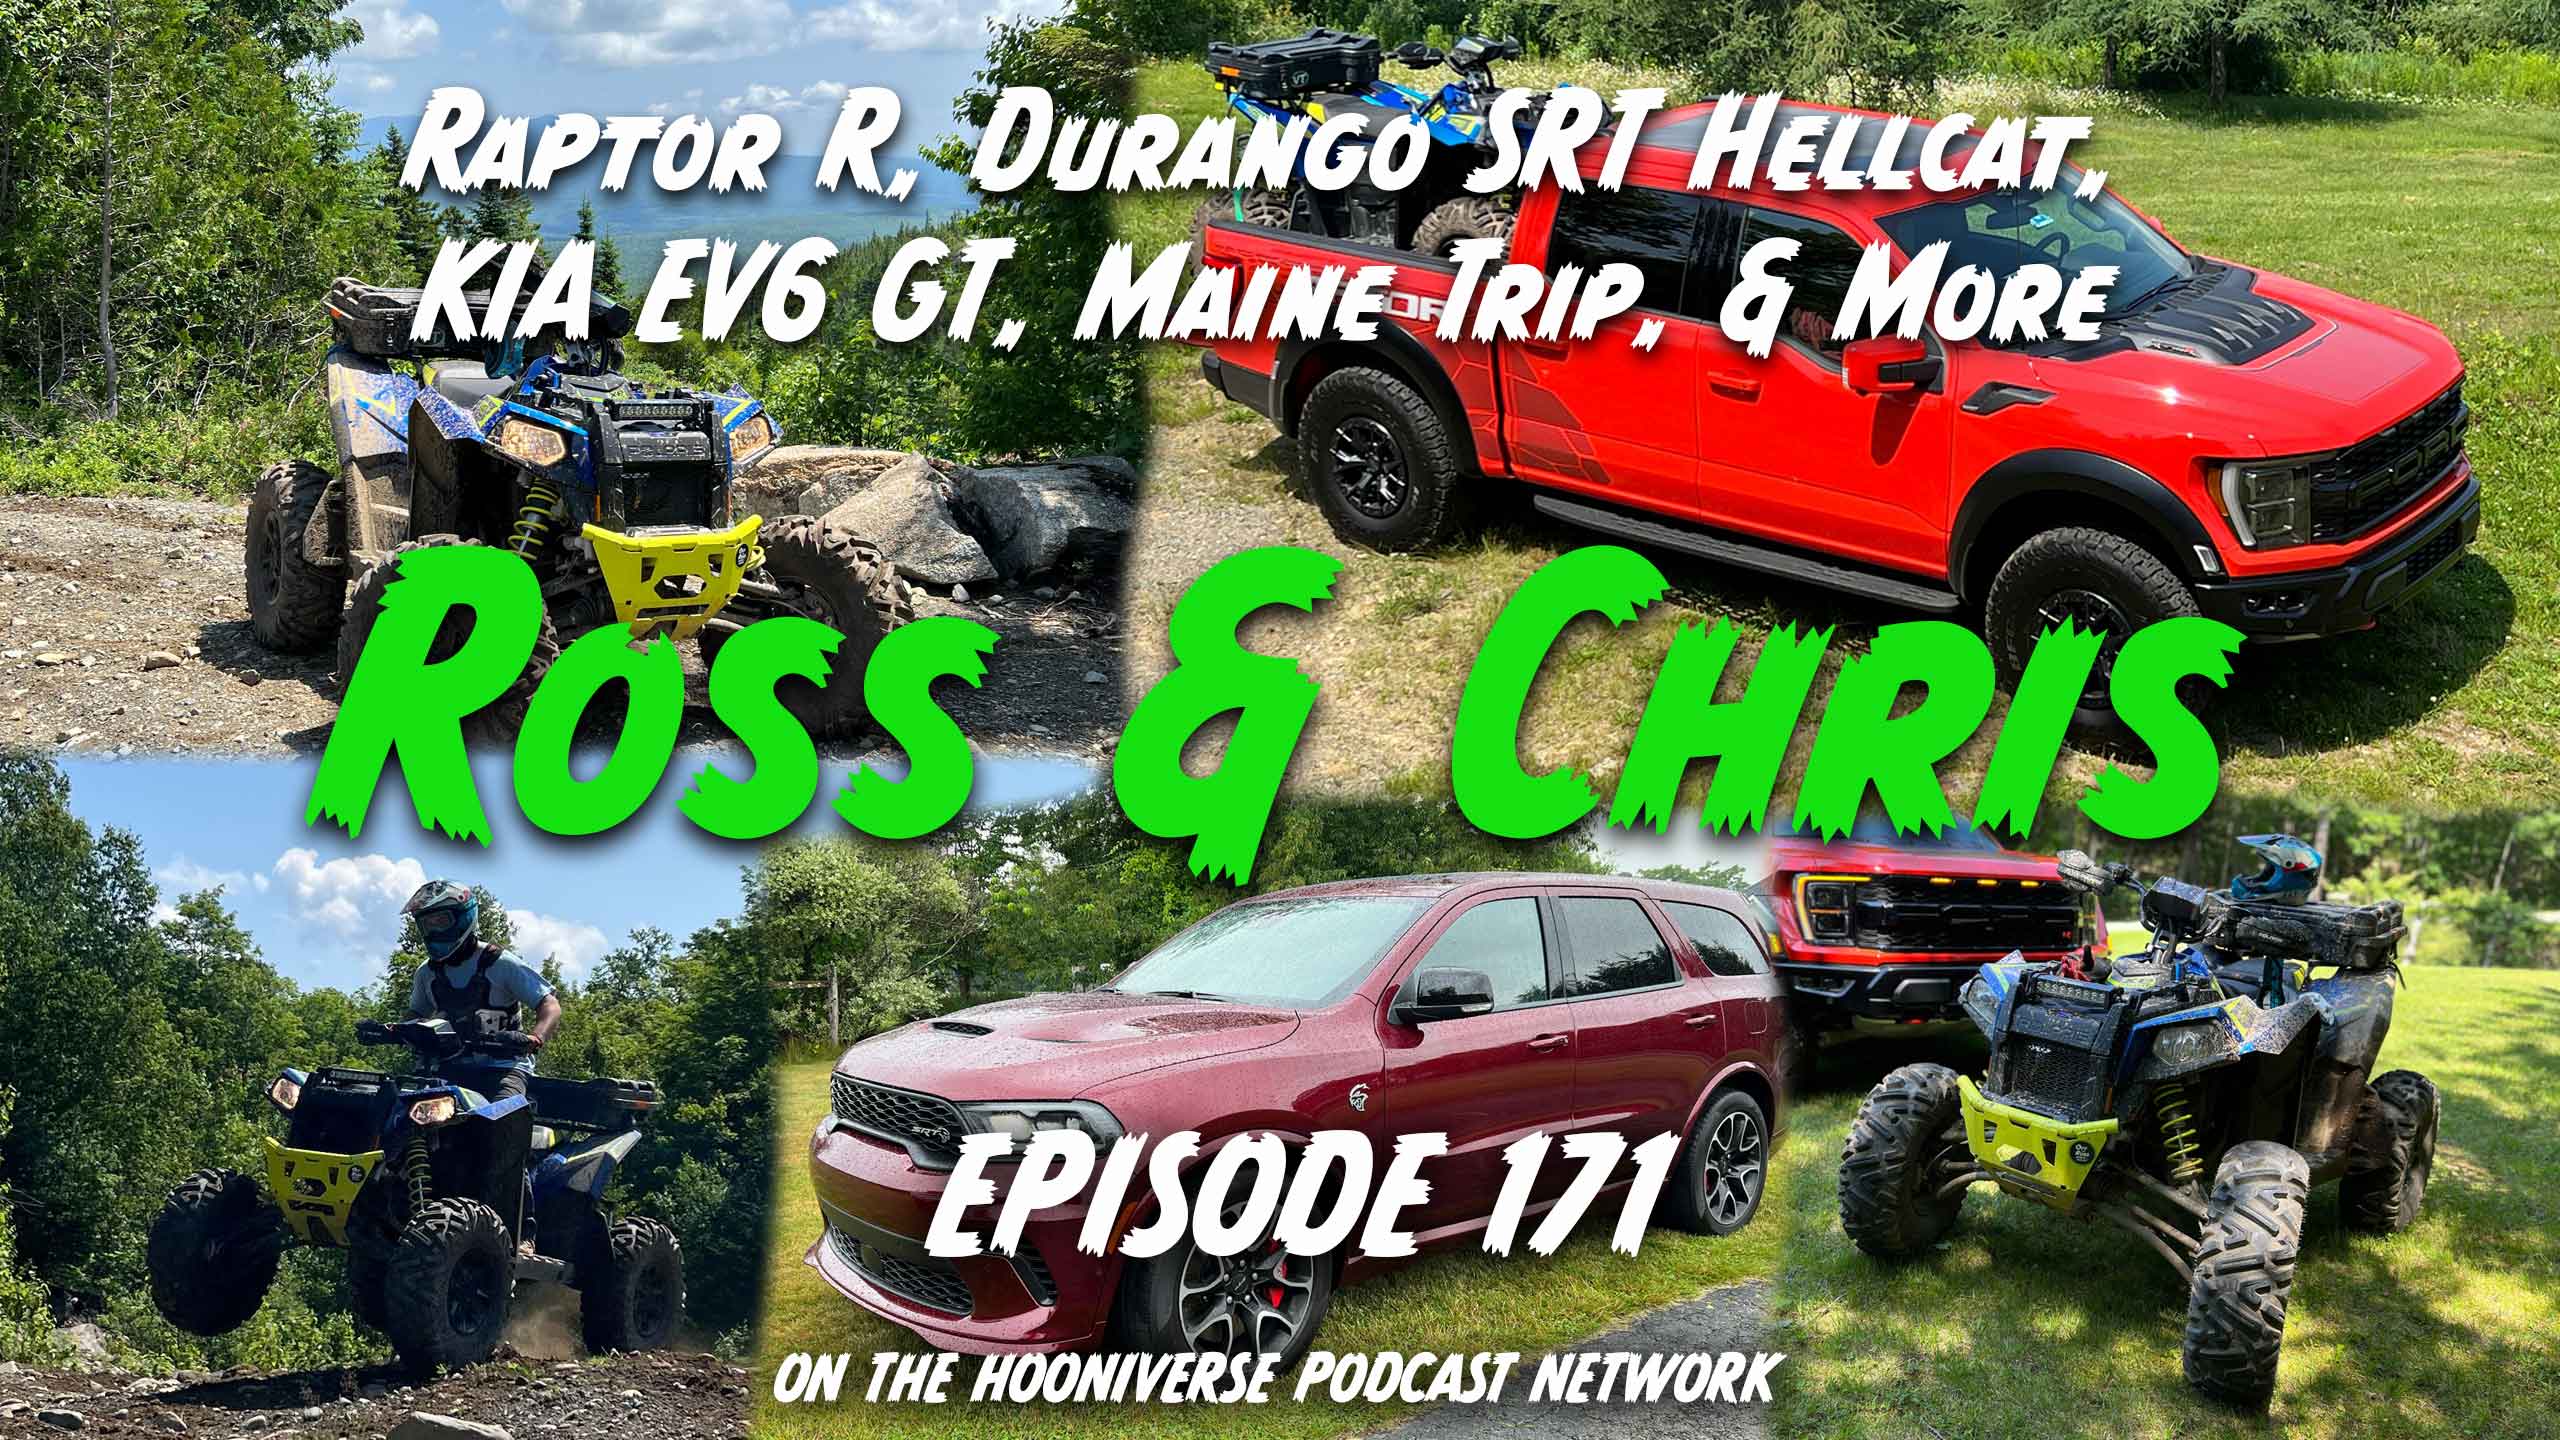 Chris-Ross-Raptor-R-Durango-SRT-Hellcat-Maine-Trip-Off-The-Road-Again-Podcast-Episode-171